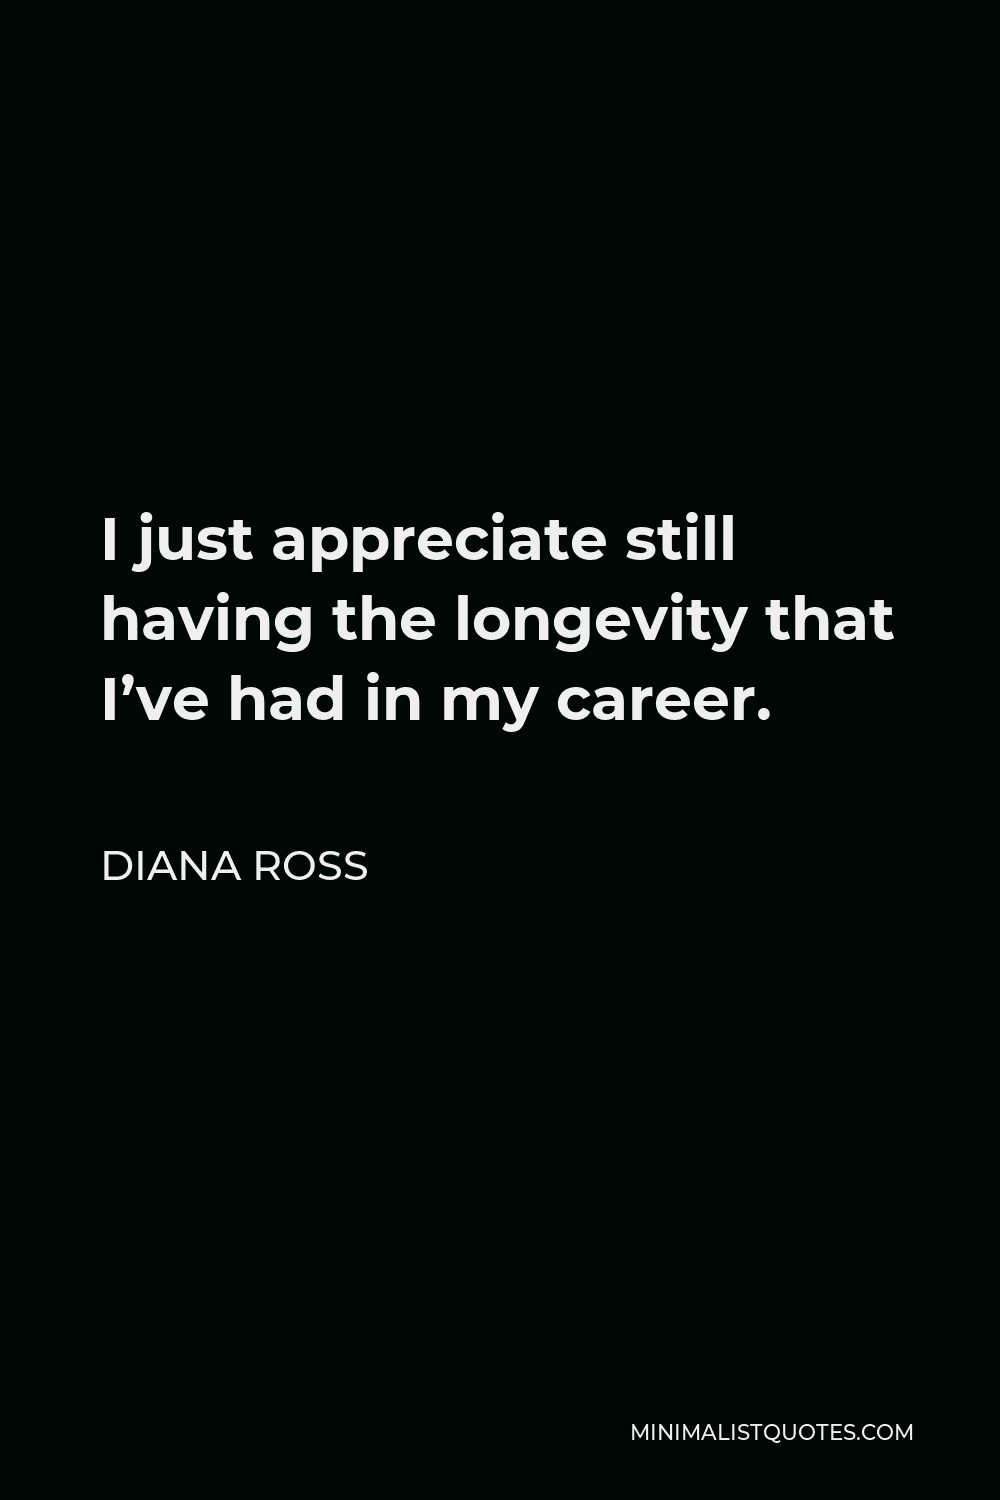 Diana Ross Quote - I just appreciate still having the longevity that I’ve had in my career.